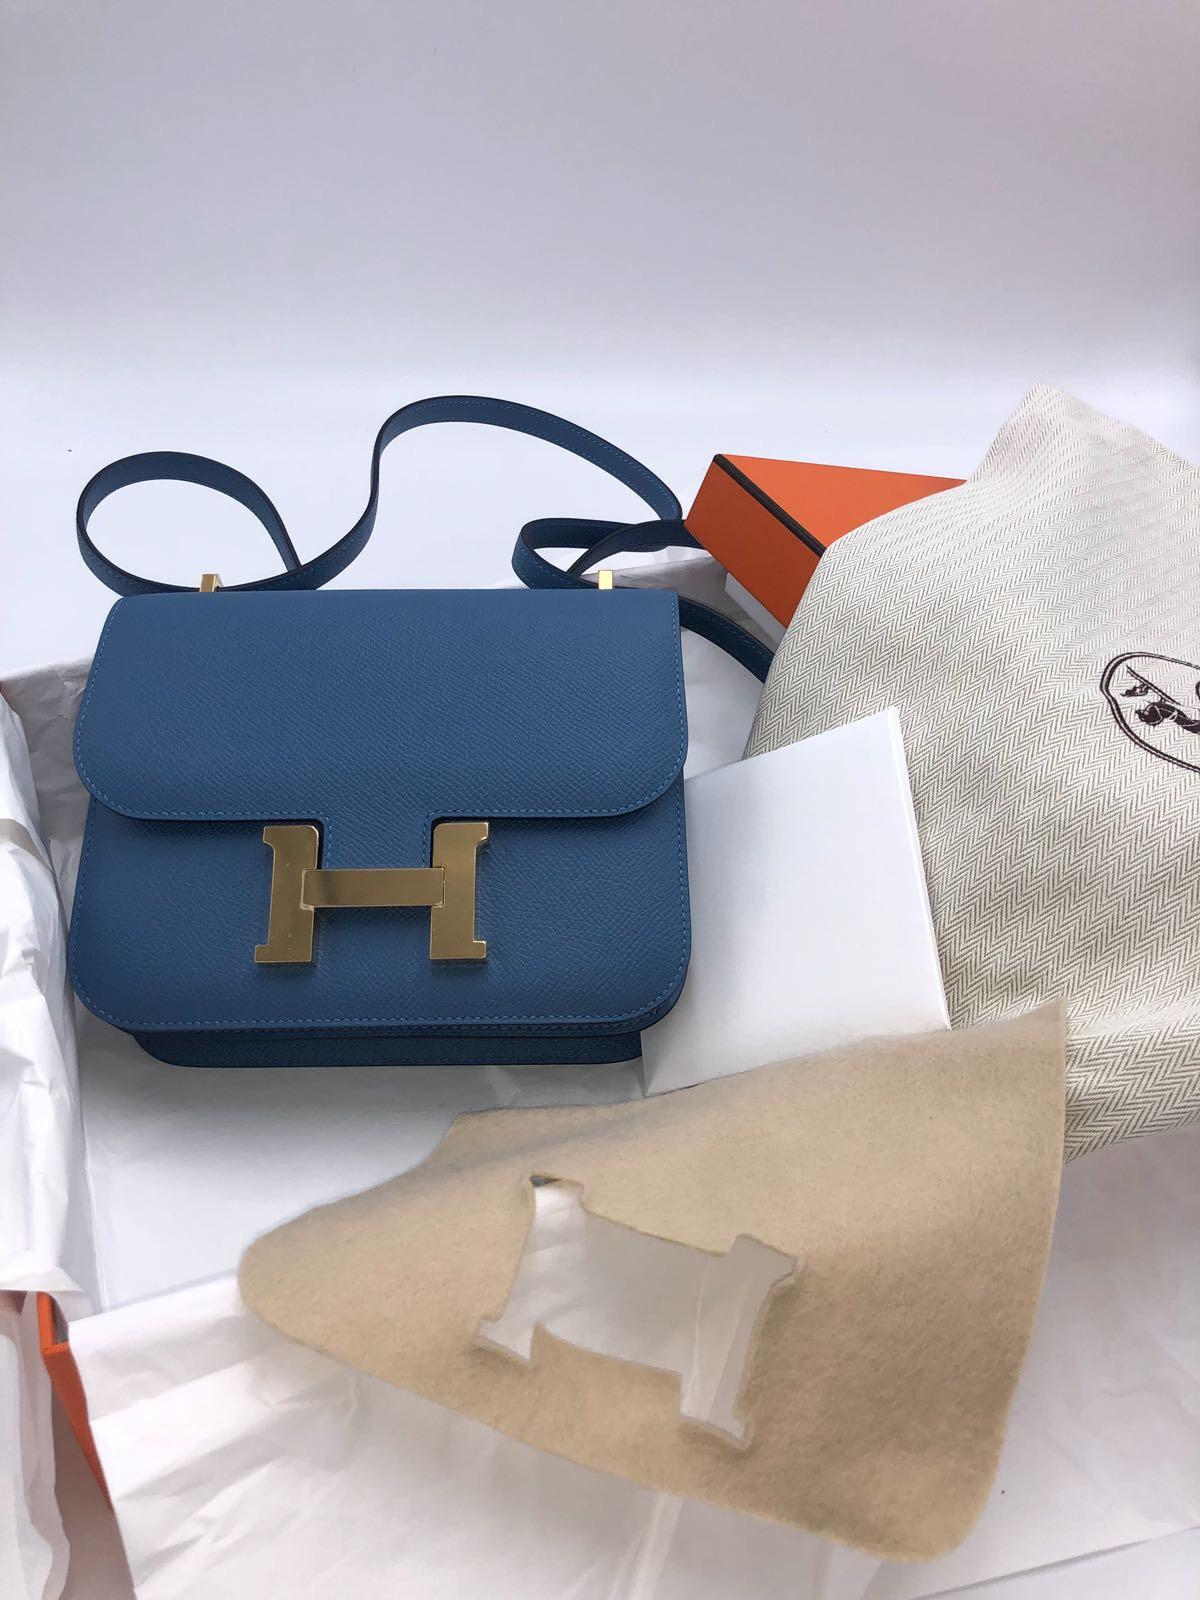 New never worn Hermes Bag
Constance
Size mini
Leather Epsom
Color Blue Azur
Gold hardware

Comes full set: 
Original box
Invoice
Dustbag